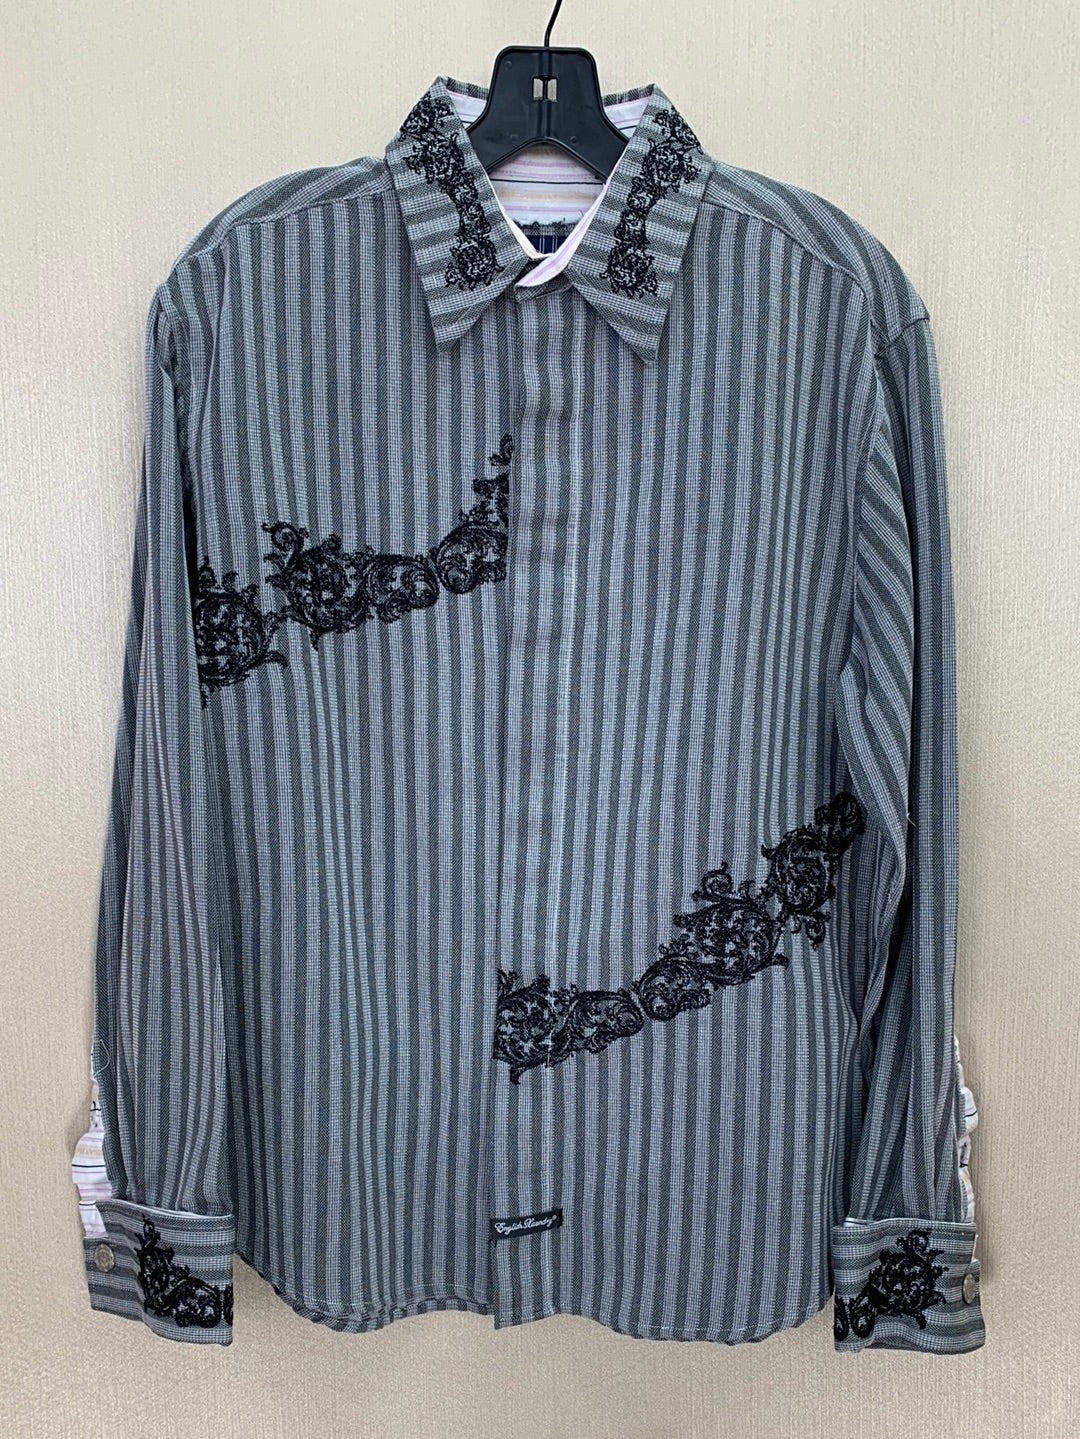 ENGLISH LAUNDRY black white stripe Hand Sewn Embroidered Shirt - M